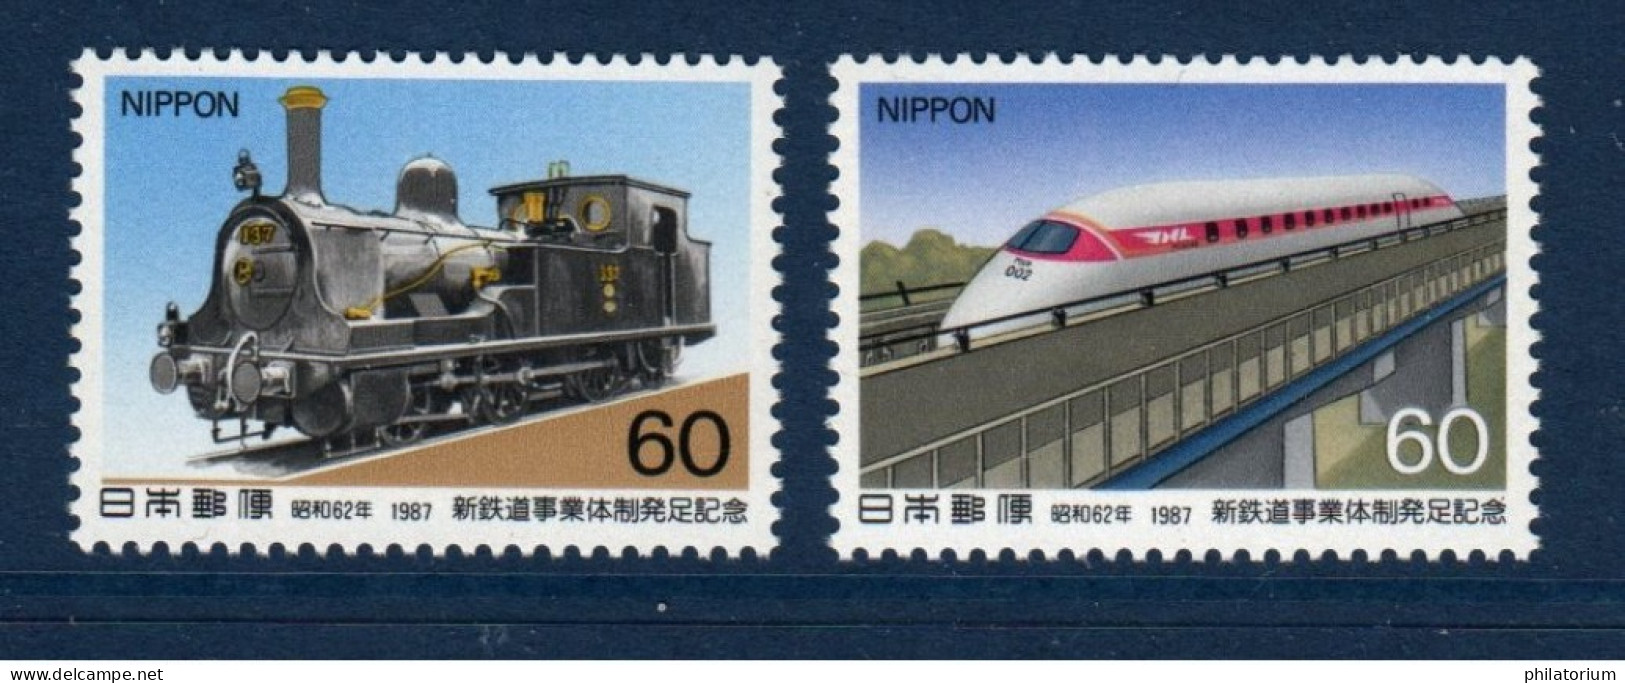 Japan, Japon, **, Yv 1627, 1628, Mi 1731, 1732, Train, - Ongebruikt